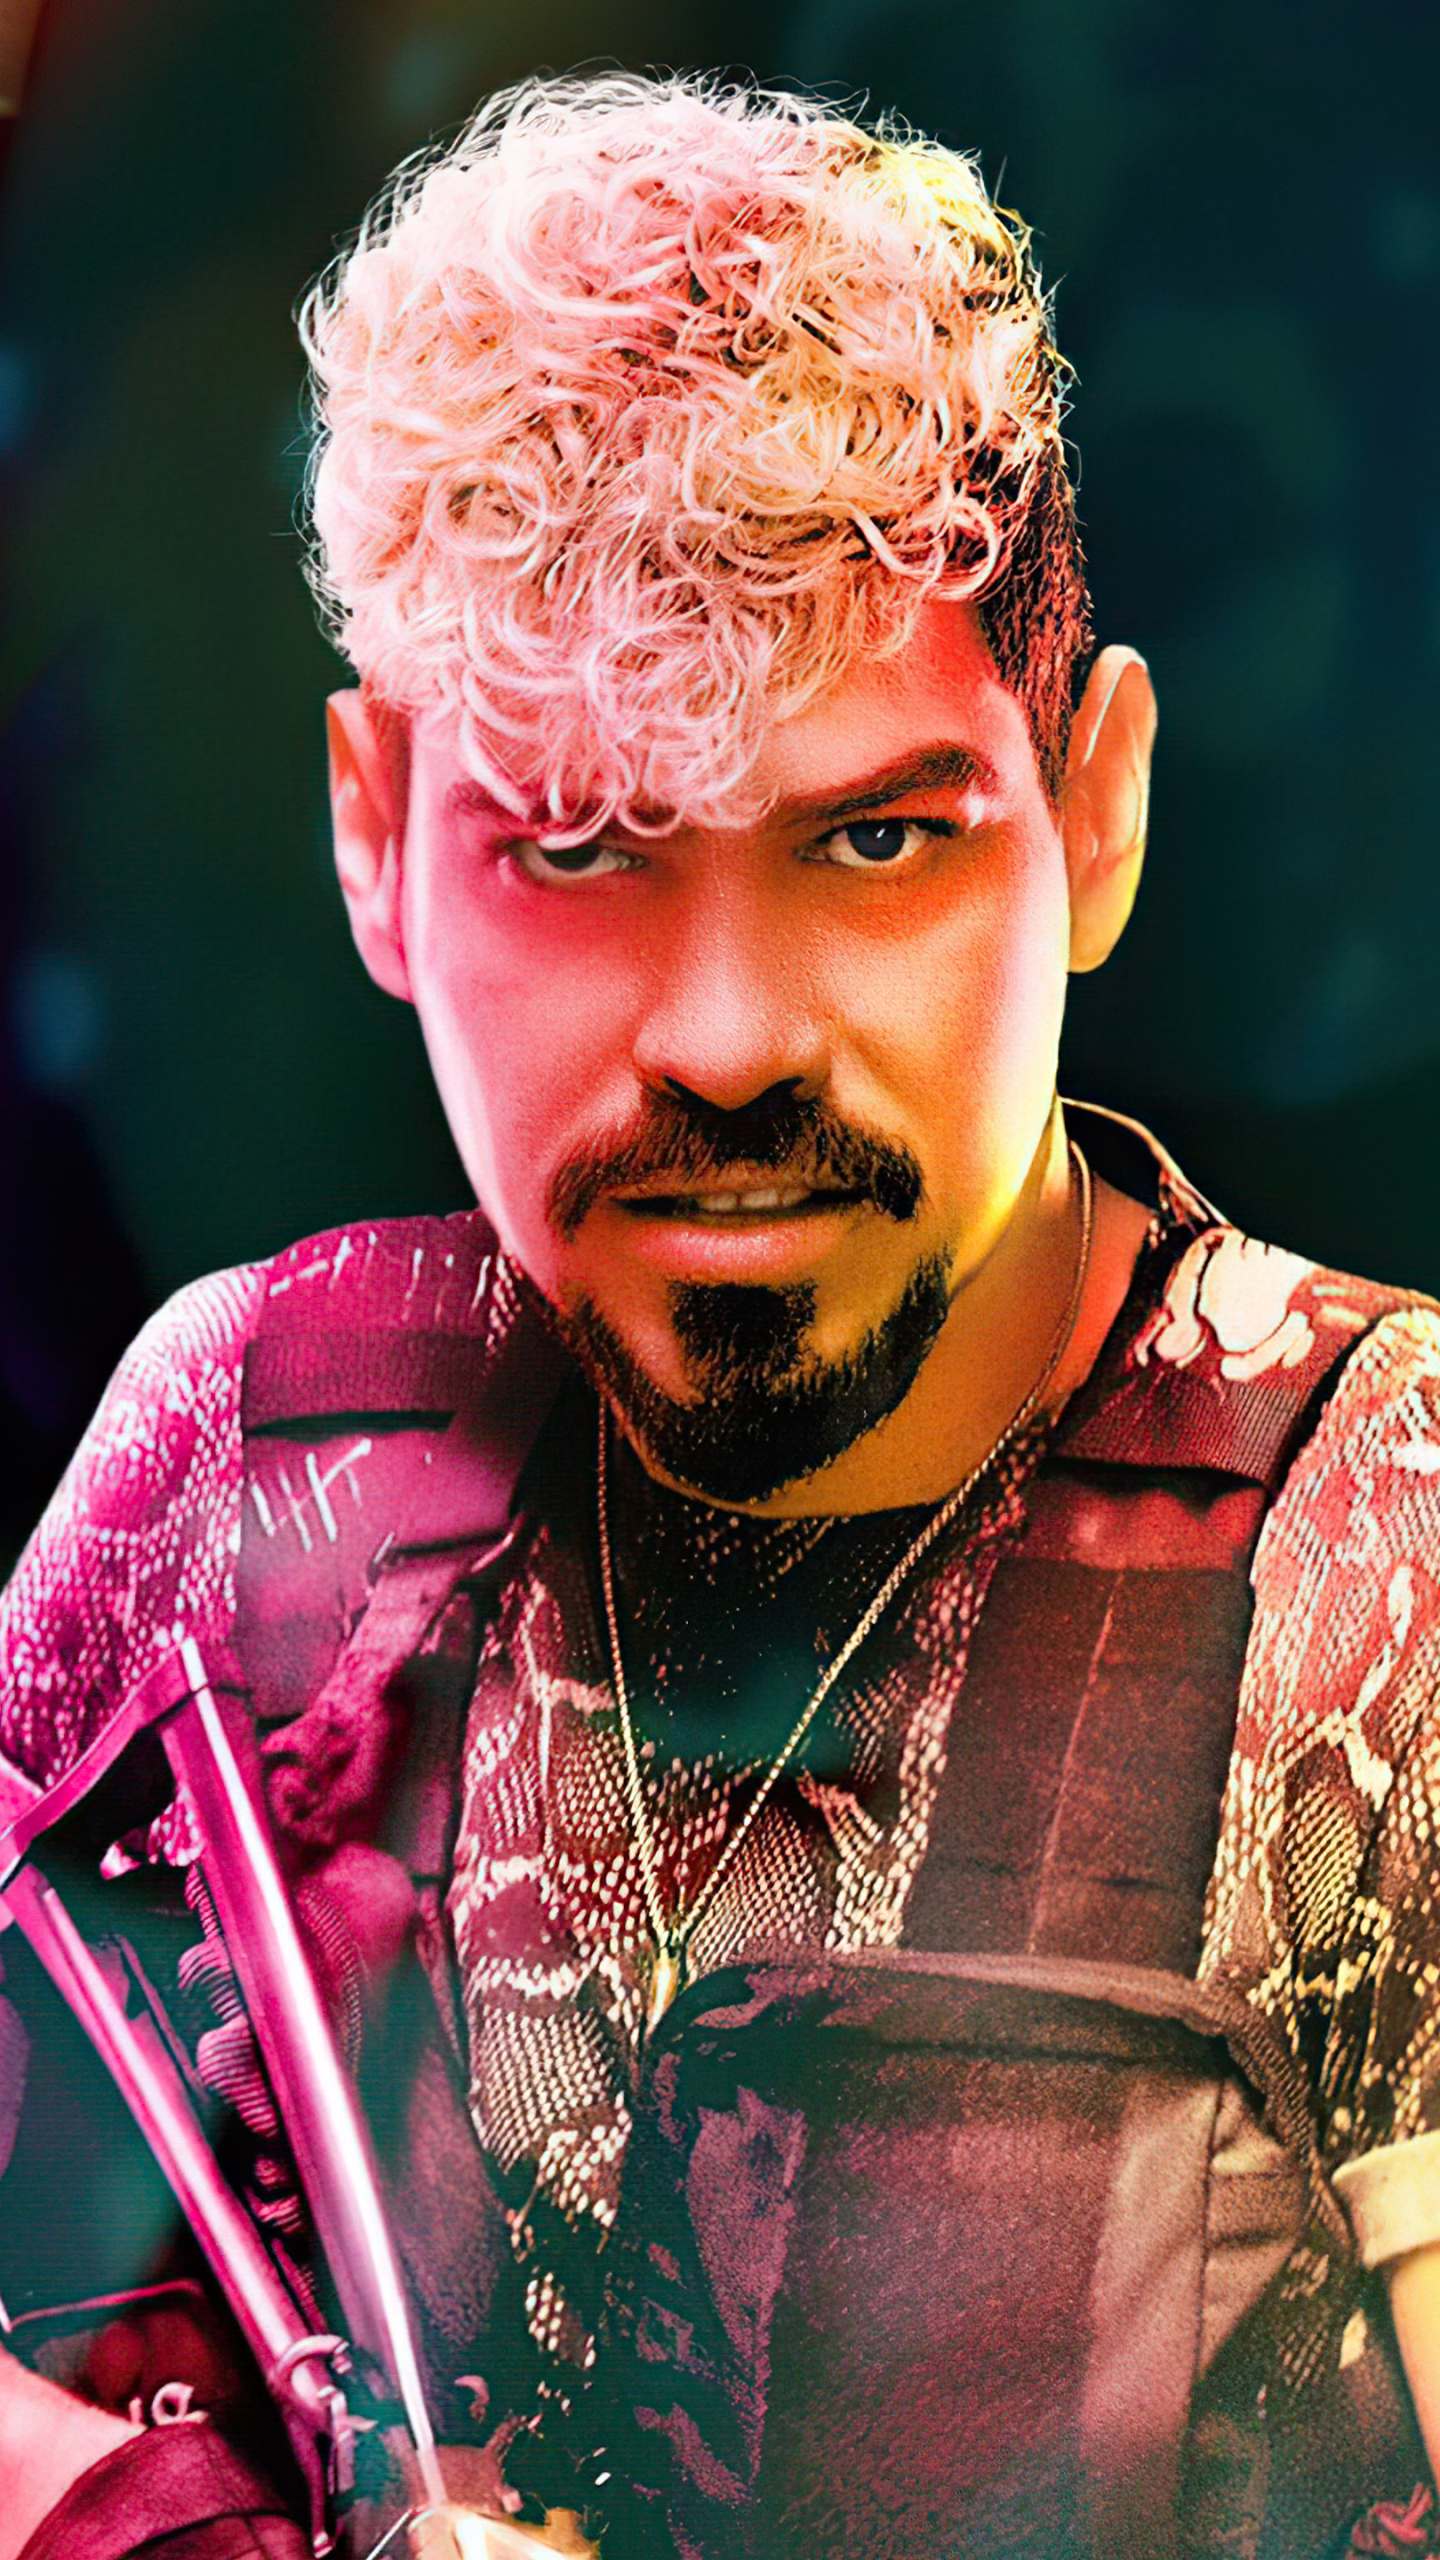 Raúl Castillo as Mikey Guzman in 2021 movie Army of the Dead